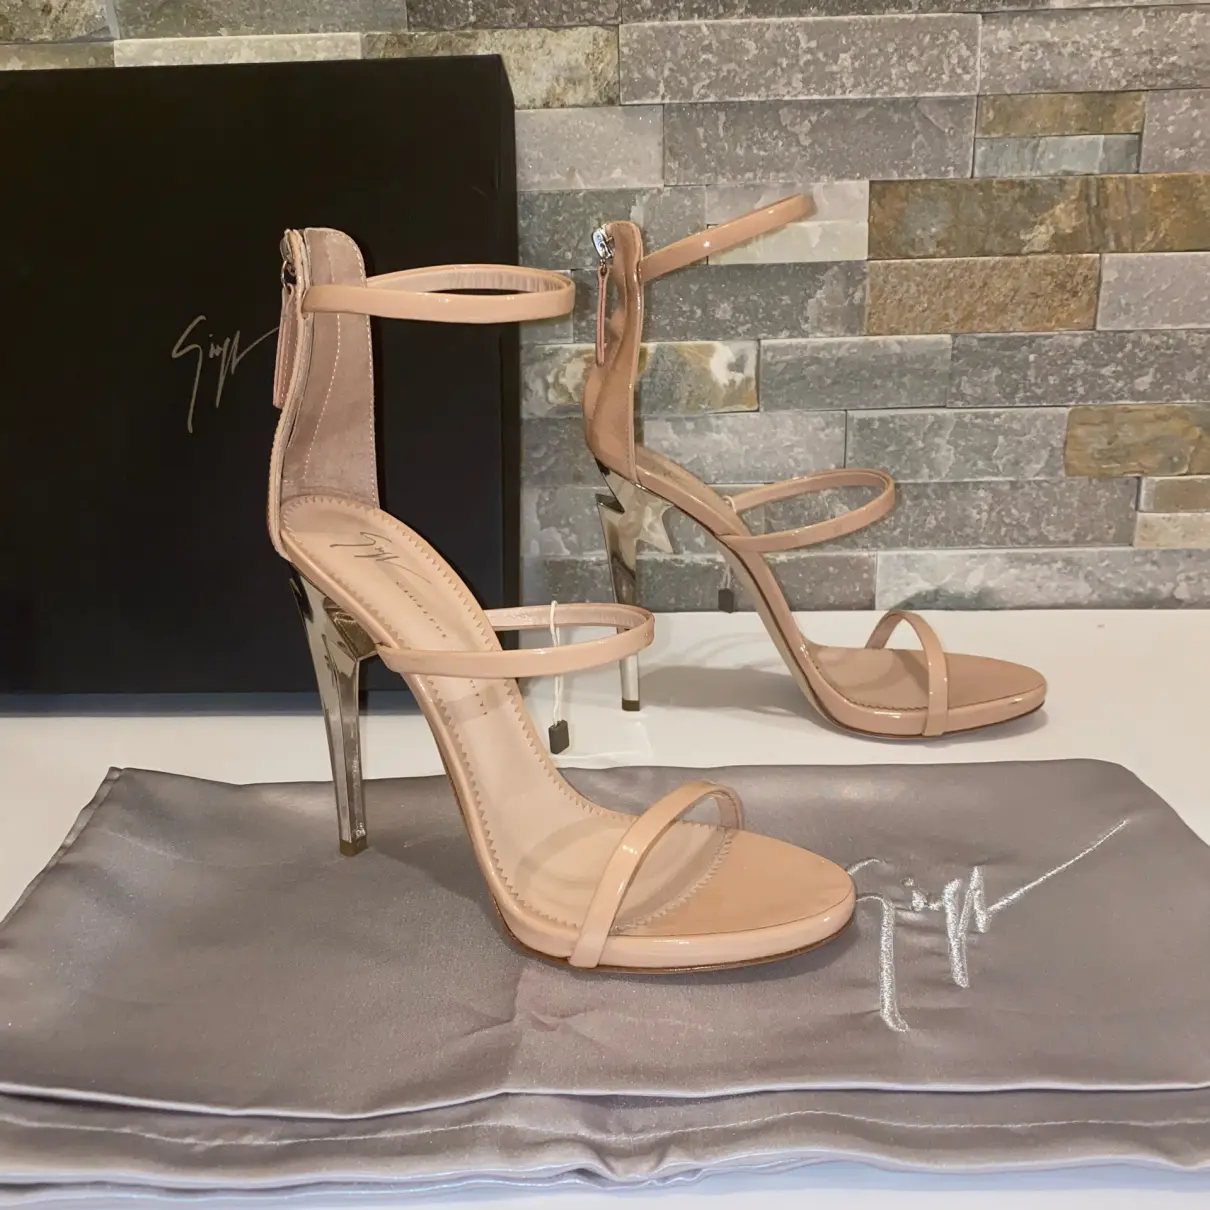 Buy Giuseppe Zanotti Patent leather sandals online